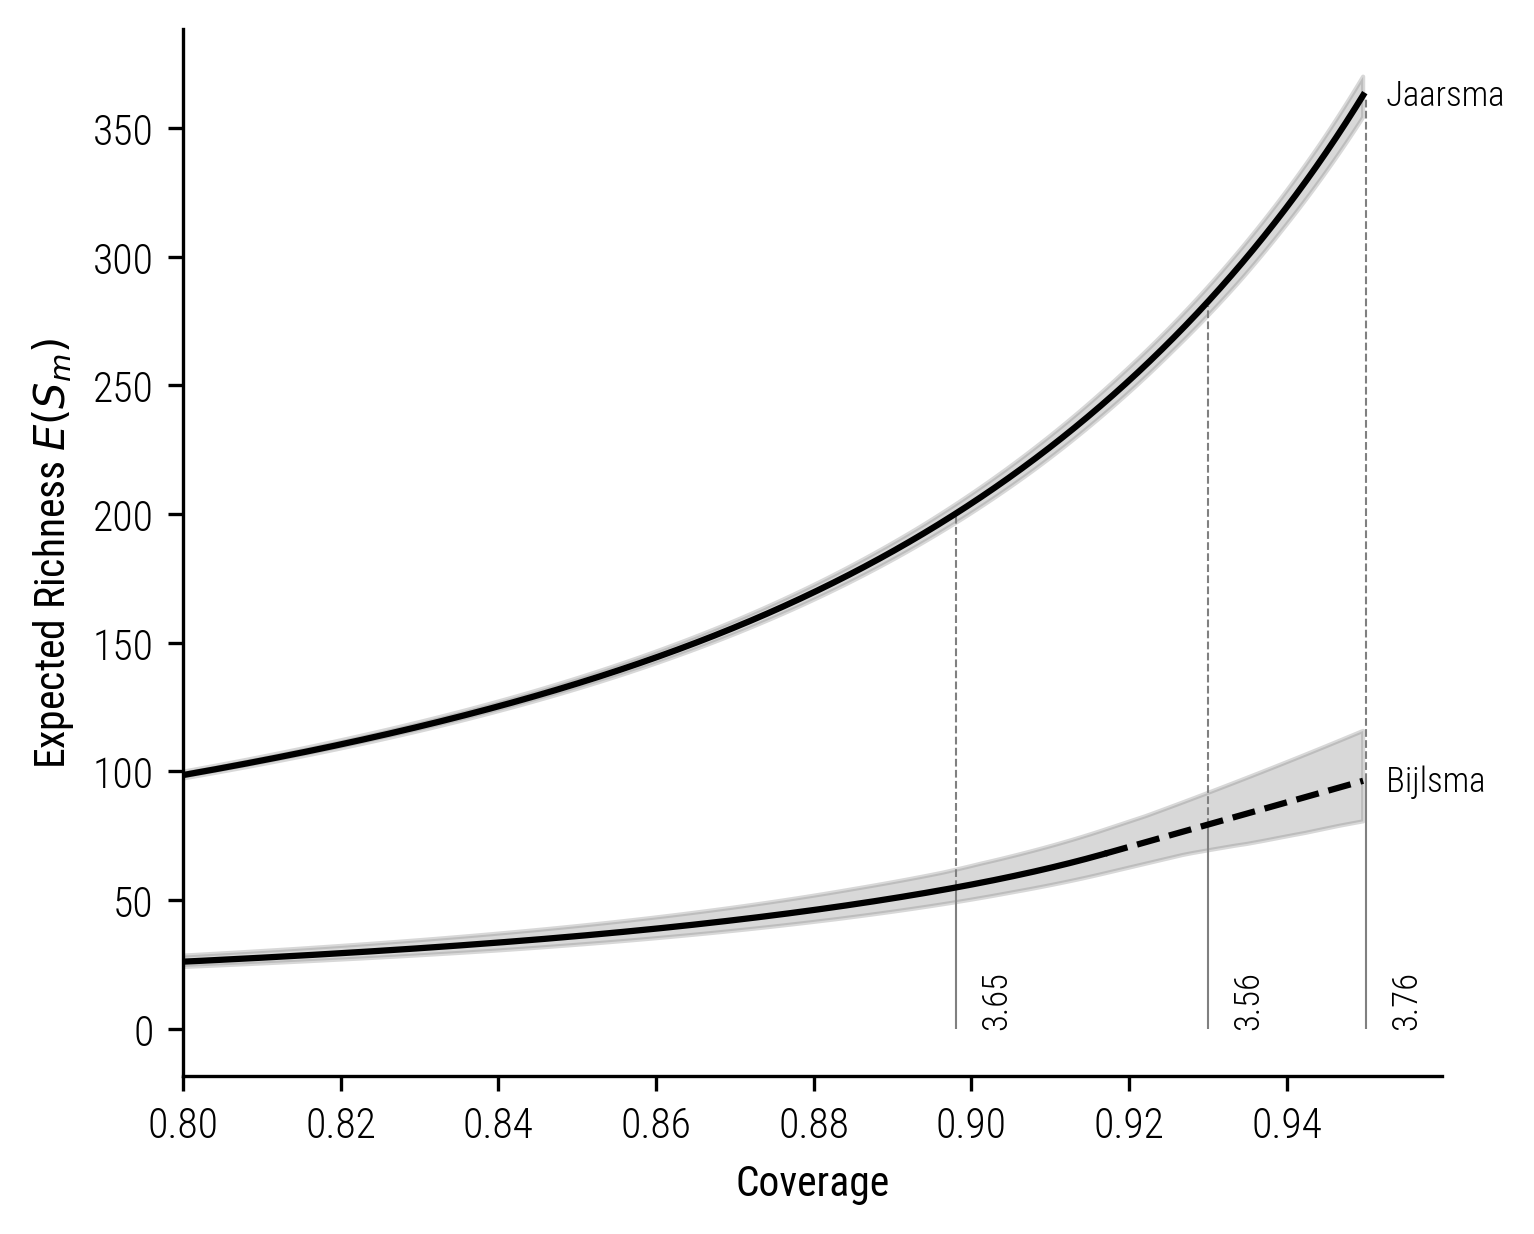 Figure 8: Coverage-based rarefaction-extrapolation curve for Jaarsma and Bijlsma.